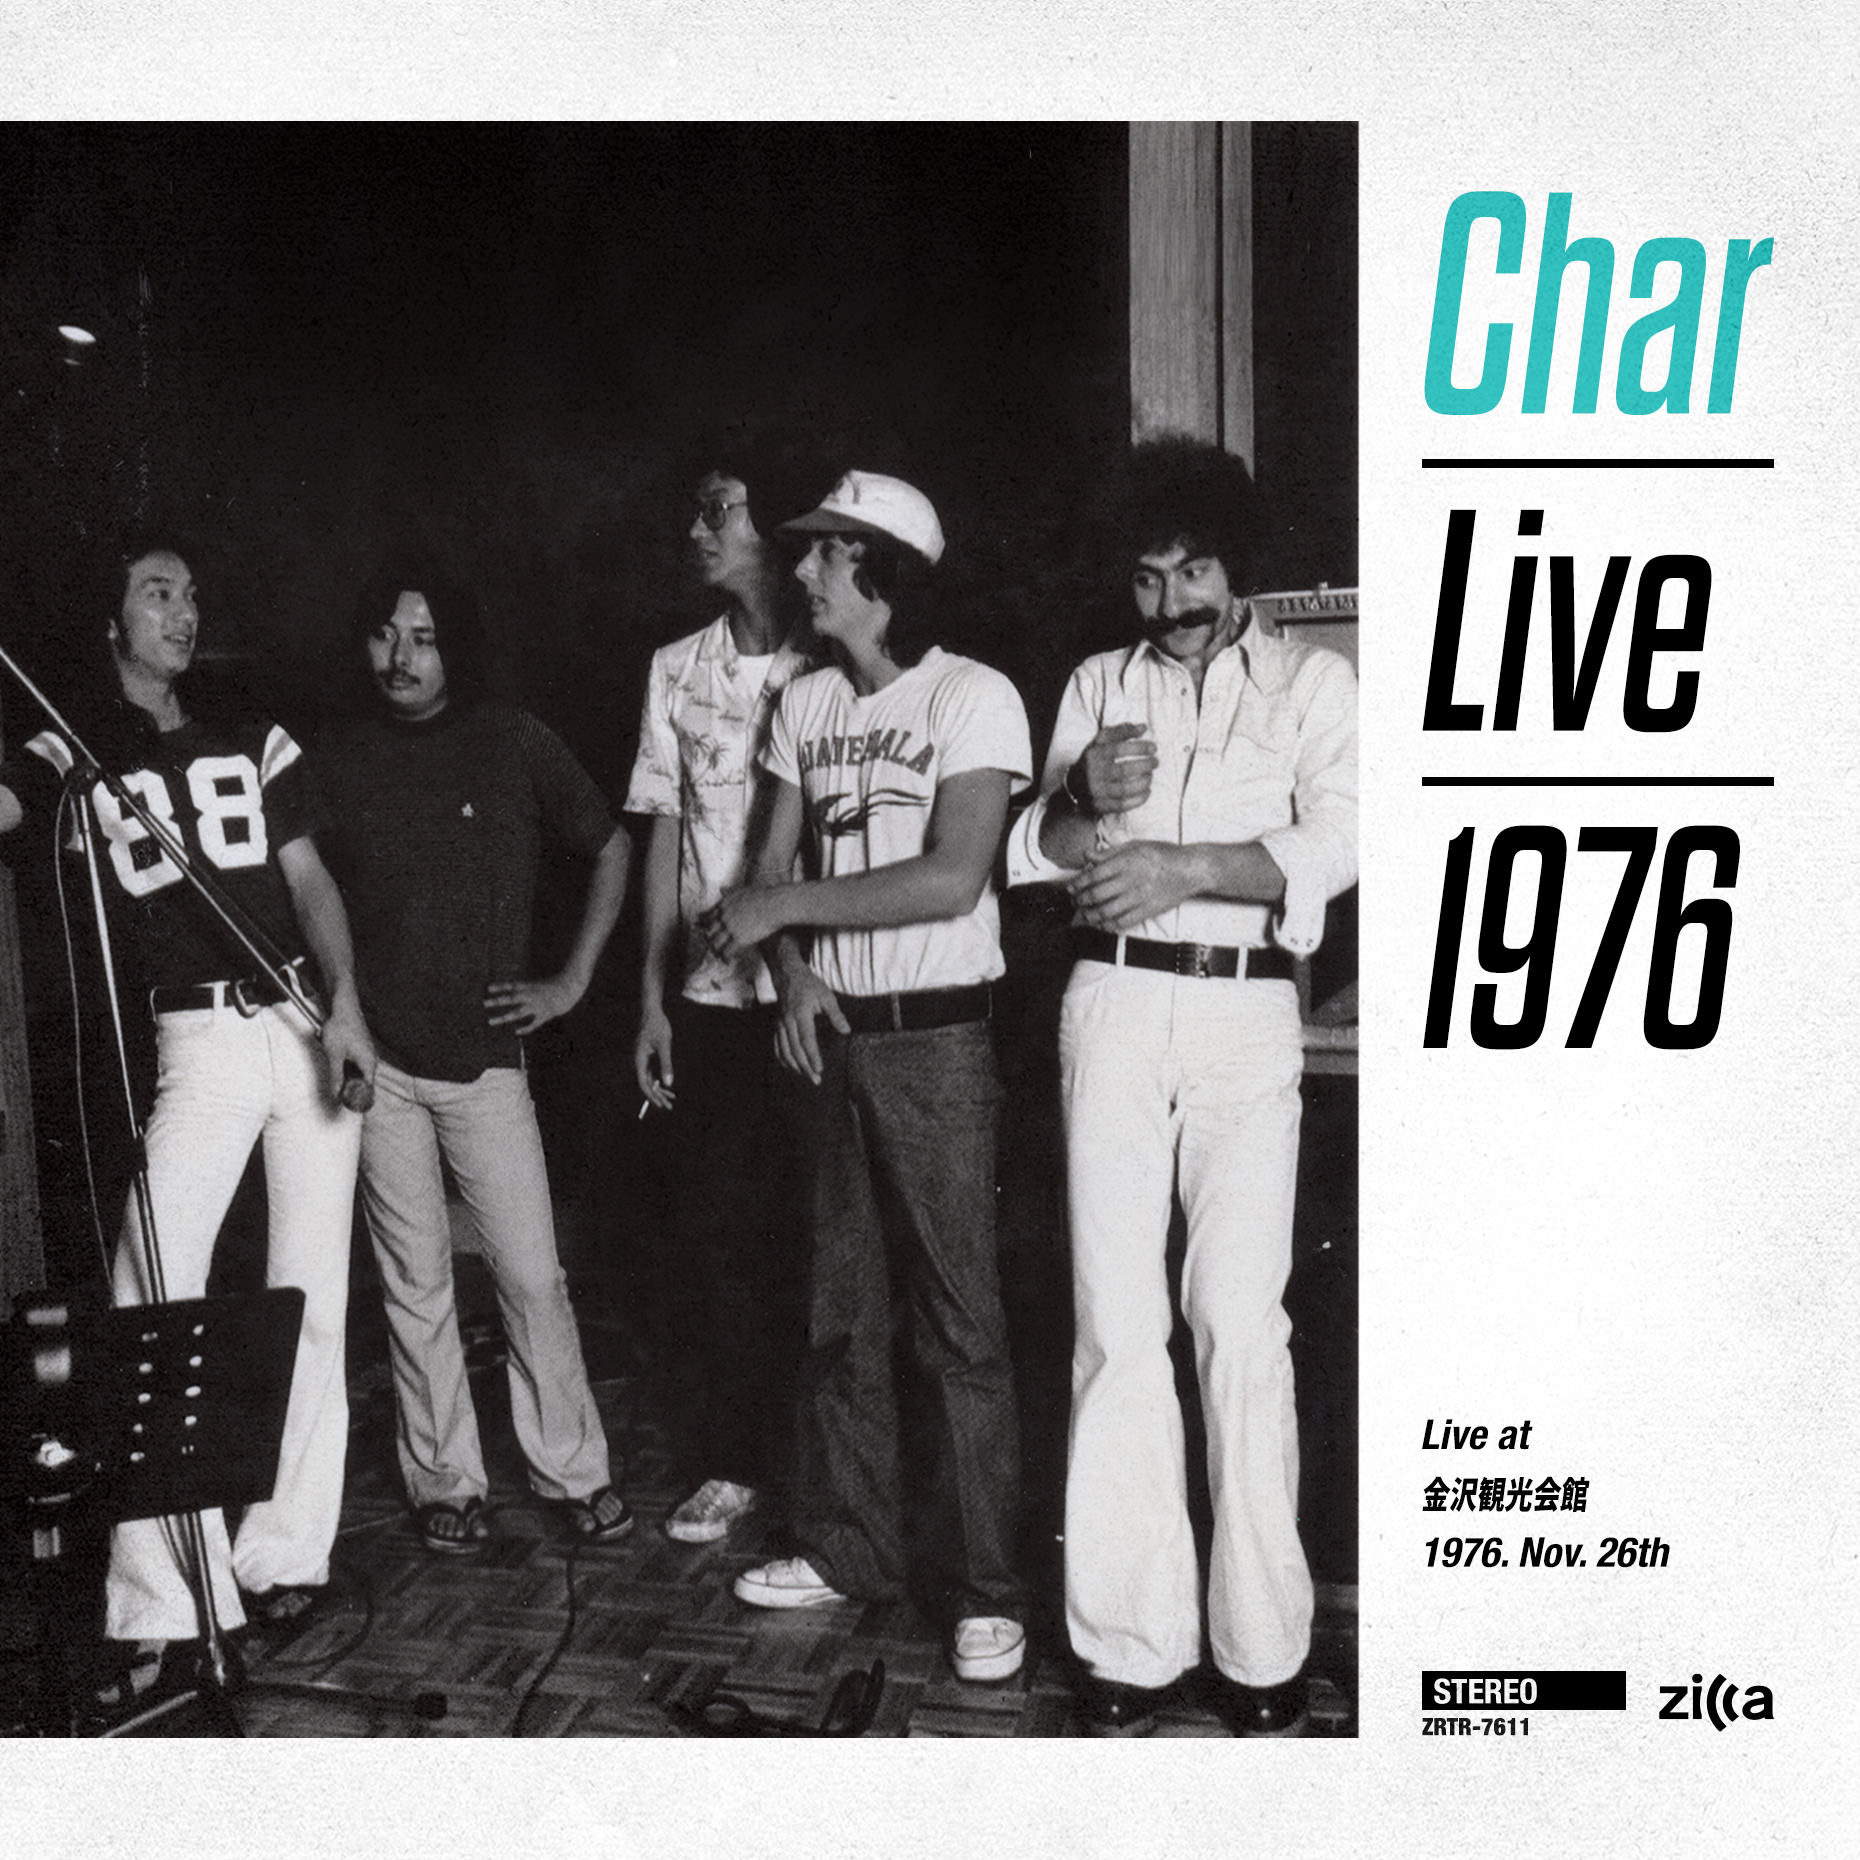 Char Live 1976 at 金沢観光会館 Nov. 26th